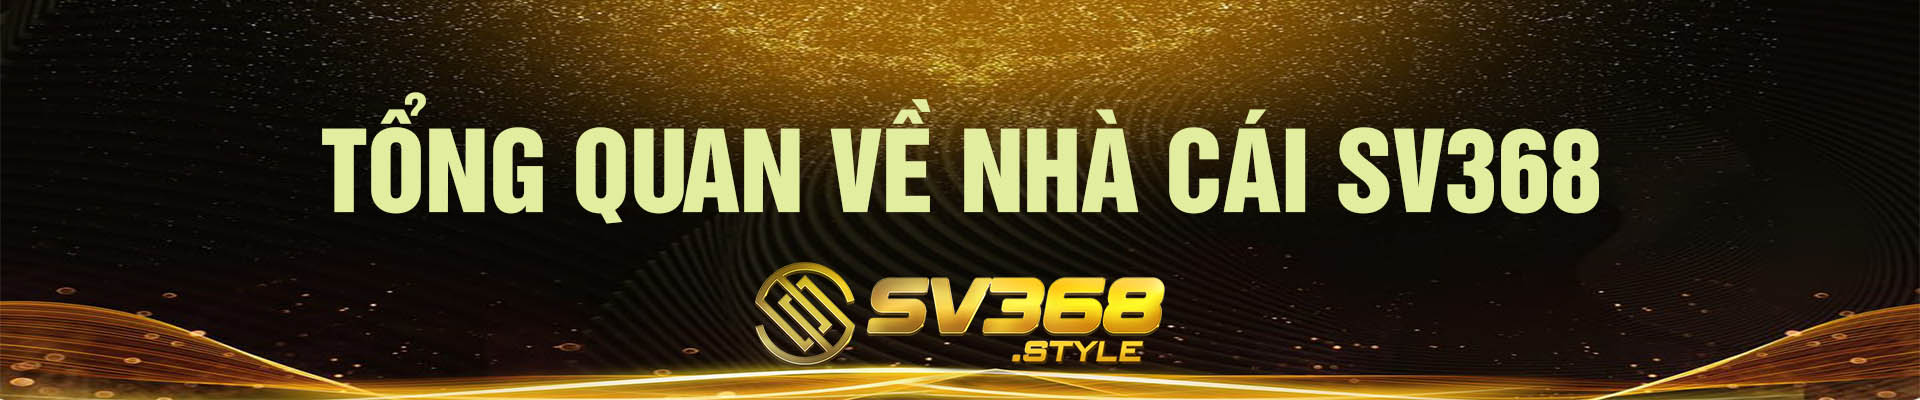 banner-sv368-style